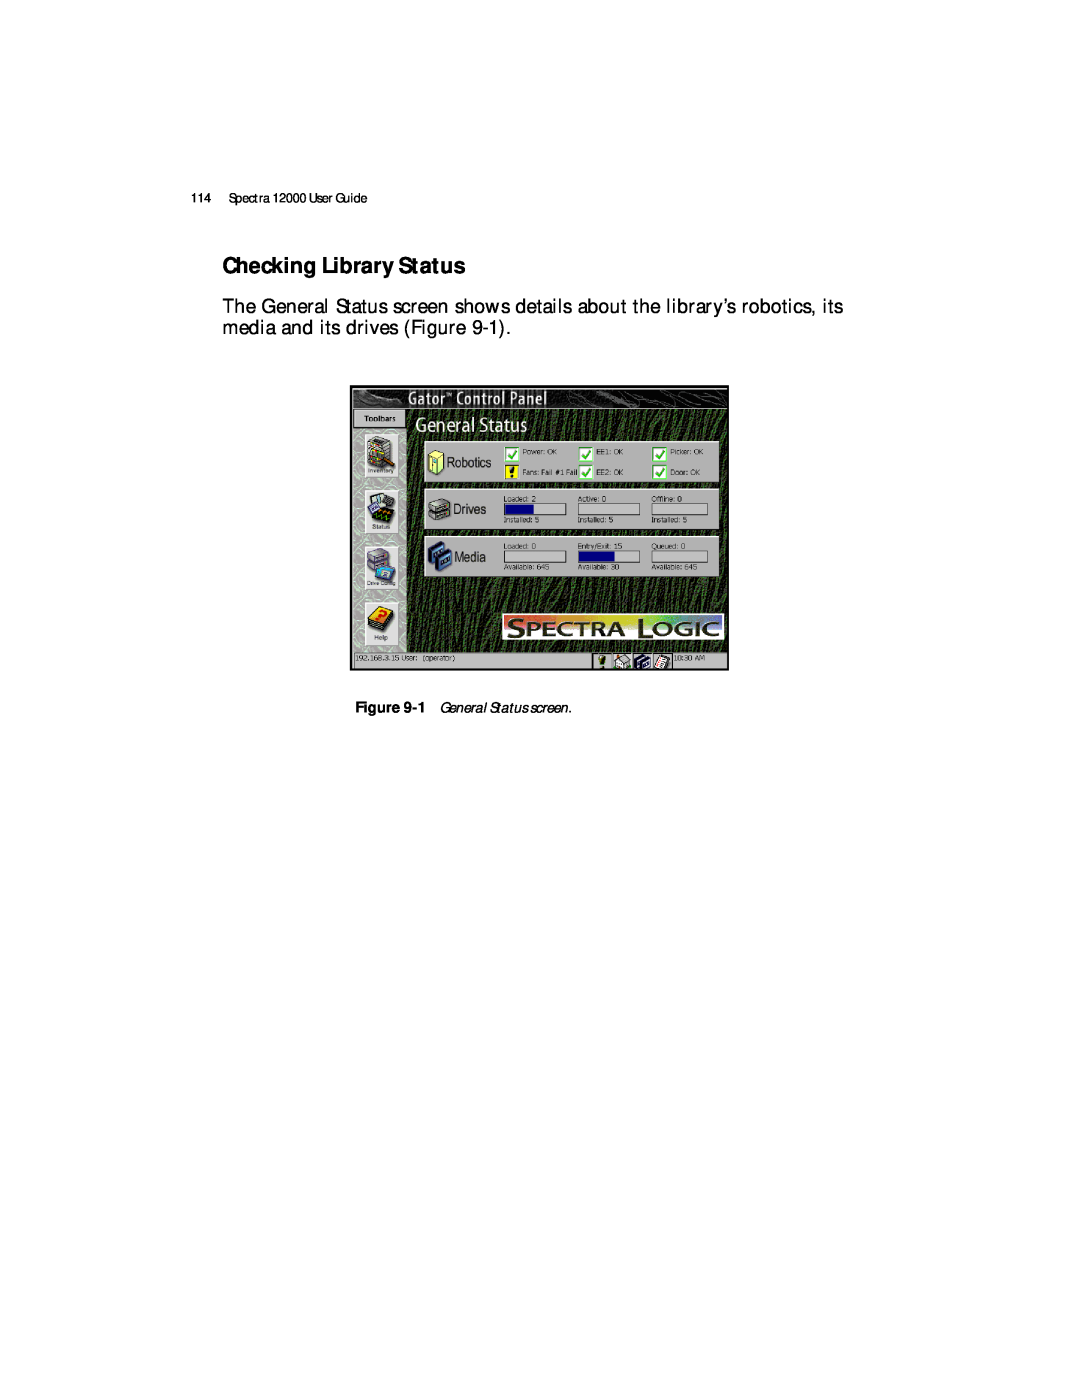 Spectra Logic Spectra 12000 manual Checking Library Status, 1 General Status screen 